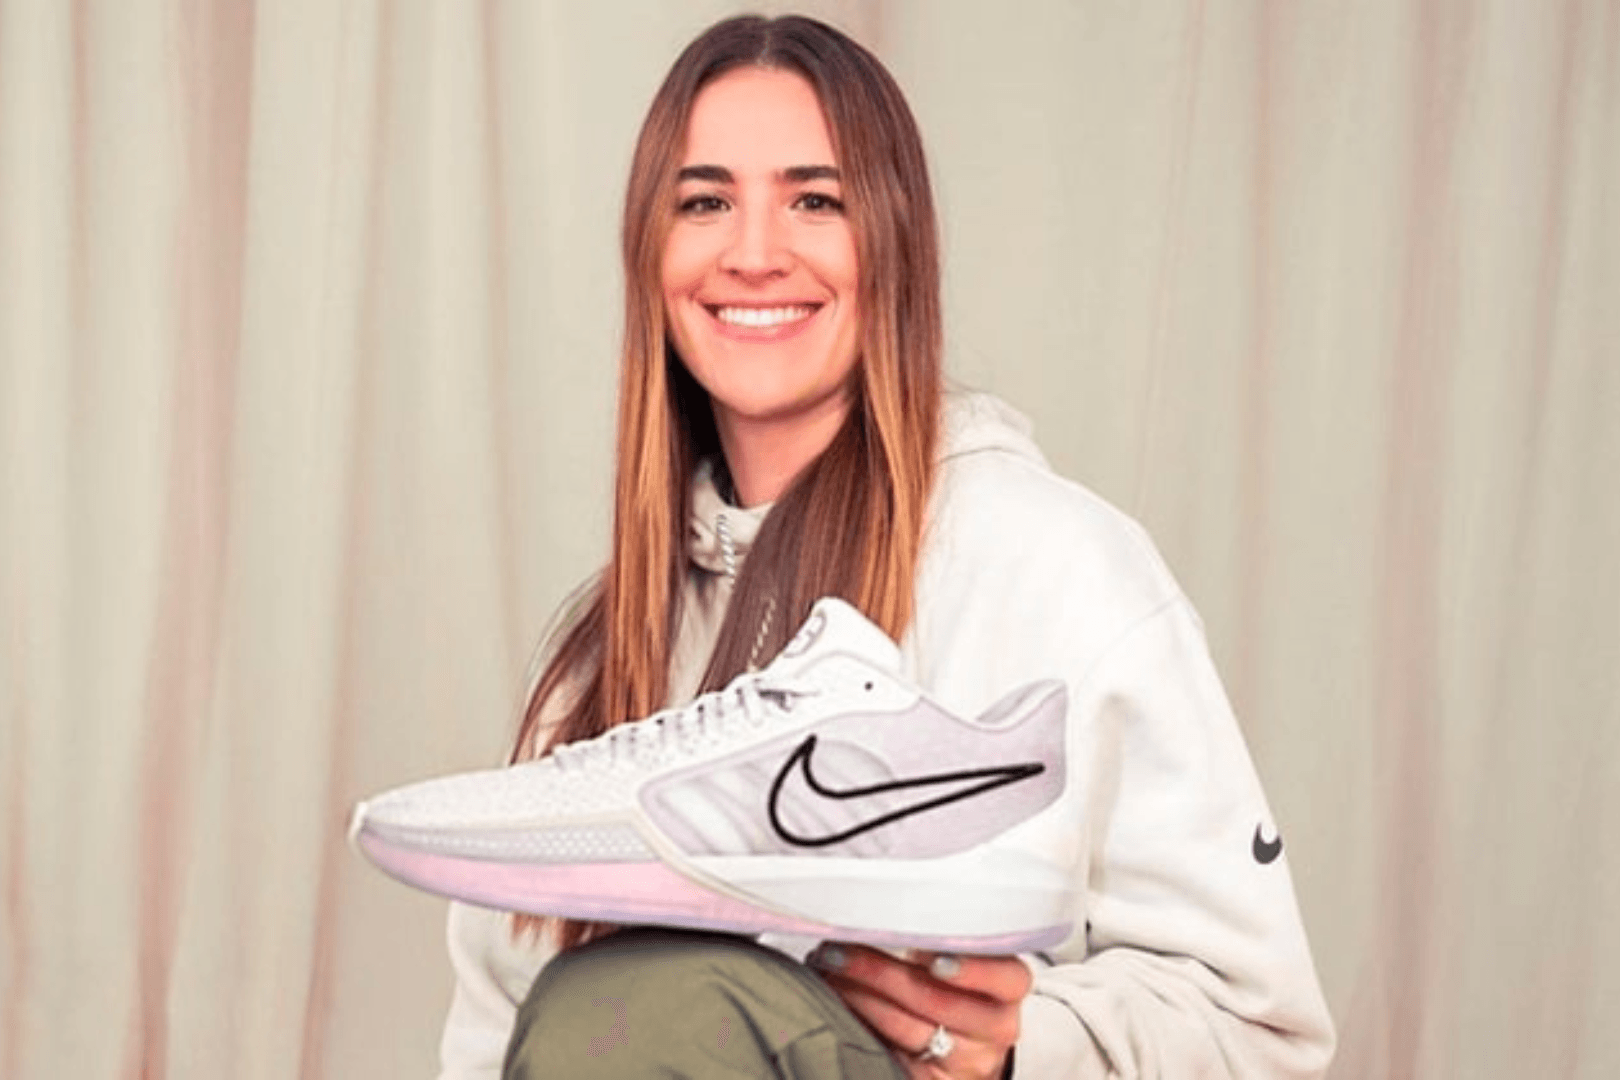 Is Sabrina Ionescu sponsored by Nike?